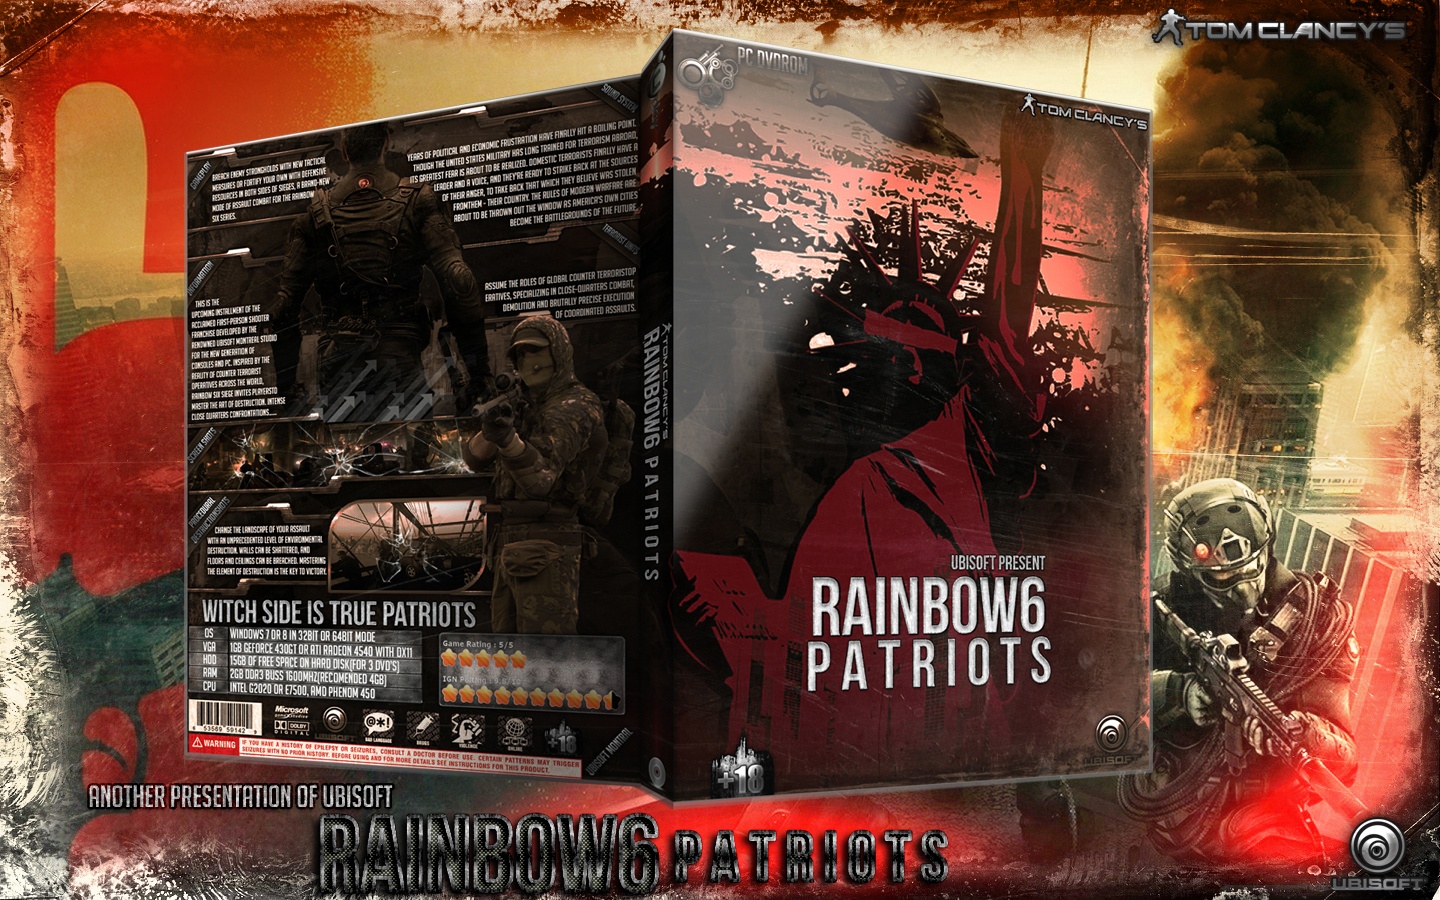 Tom Clancy's Rainbow 6: Patriots box cover